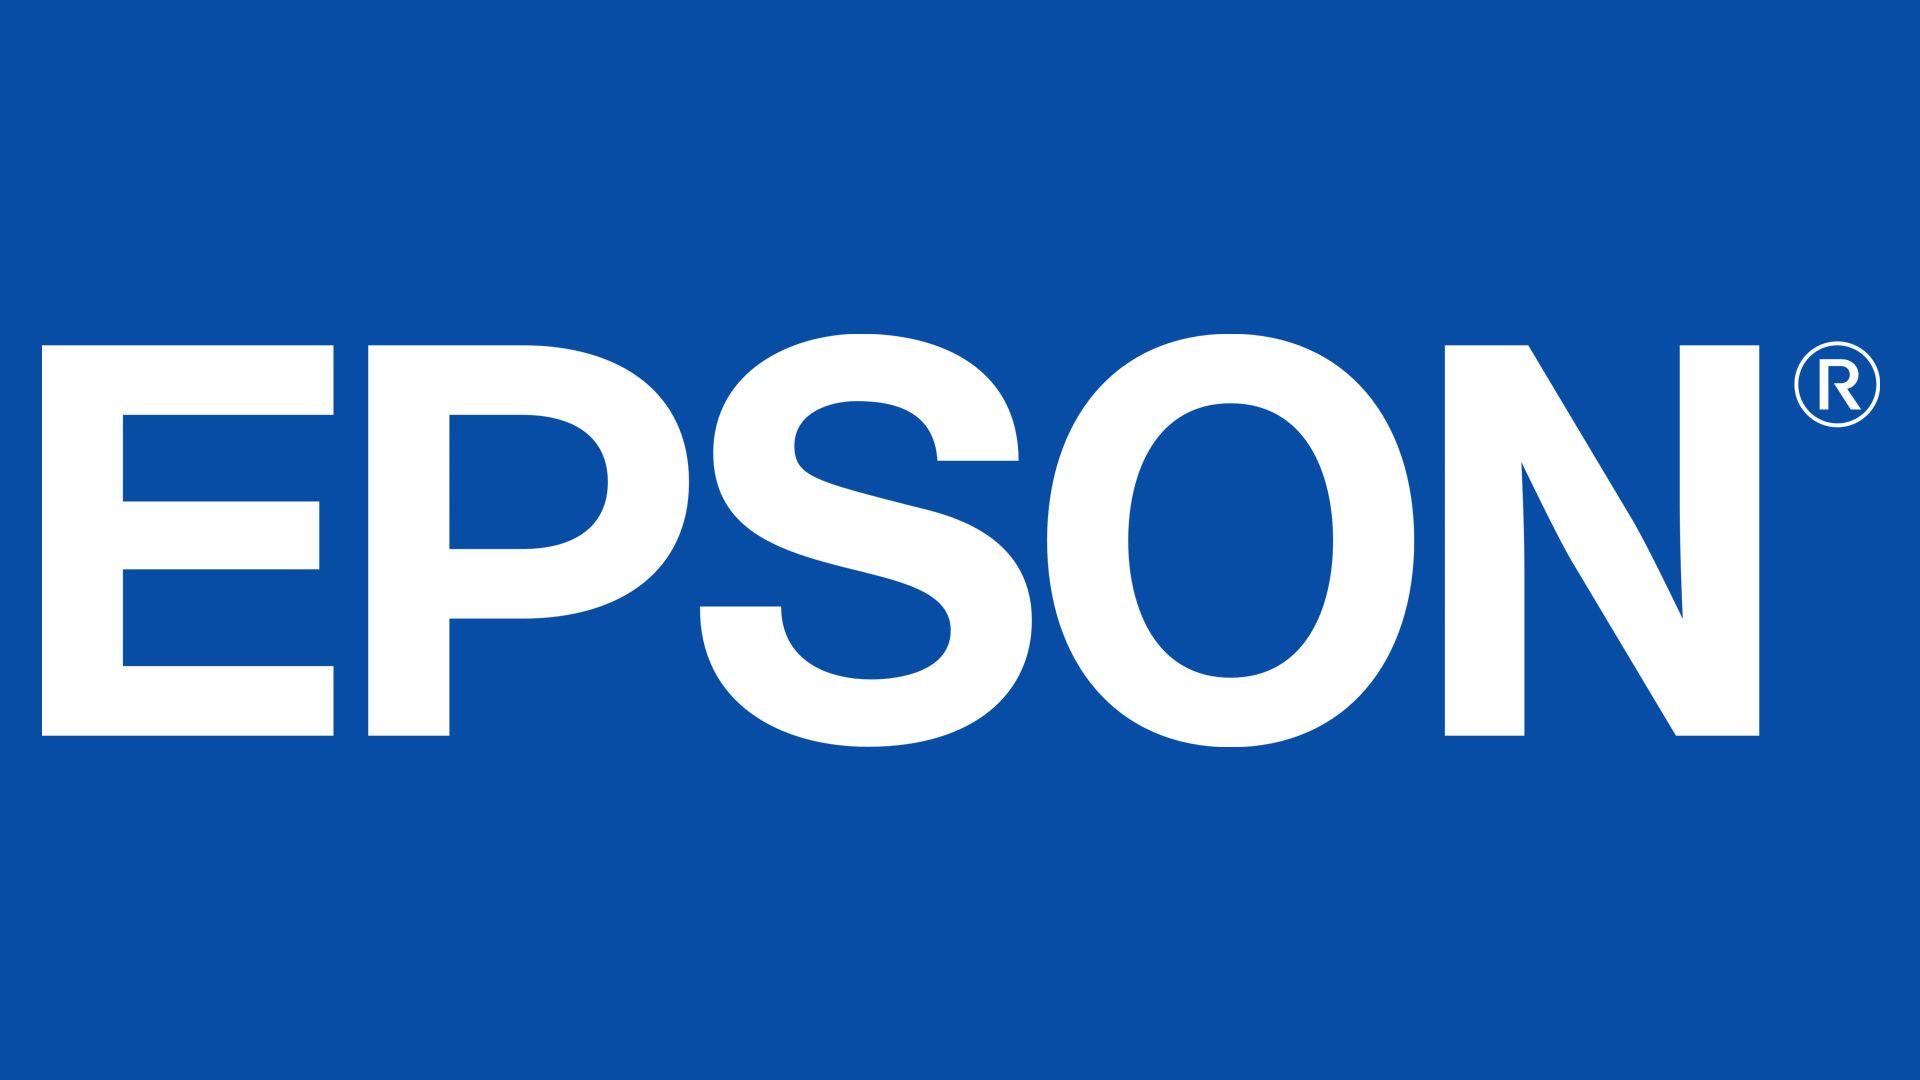 Epson Logo - Epson Logo, Epson Symbol, Meaning, History and Evolution